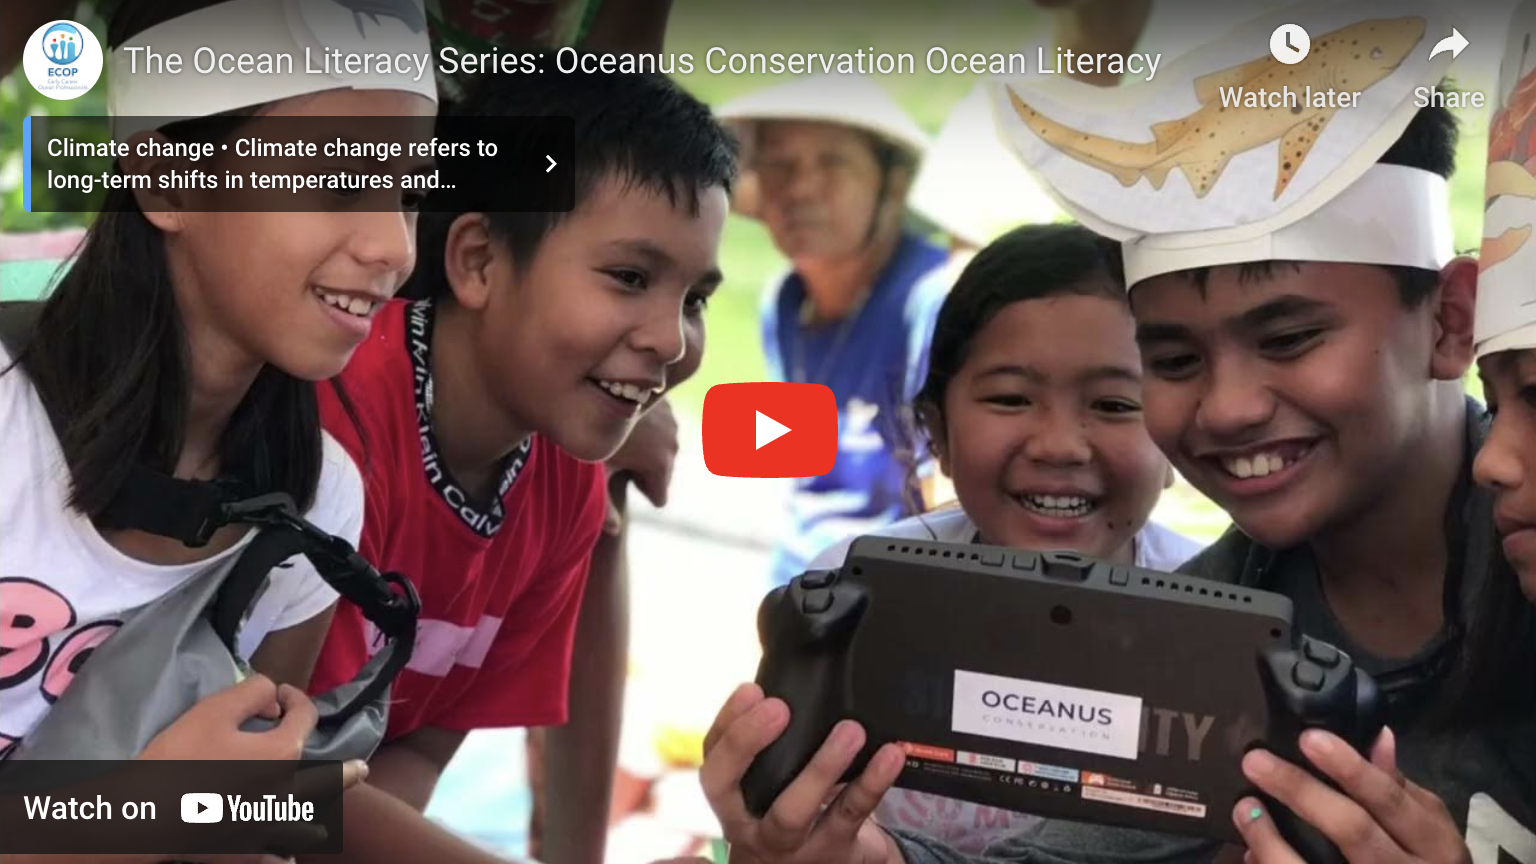 Oceanus Conservation Ocean Literacy